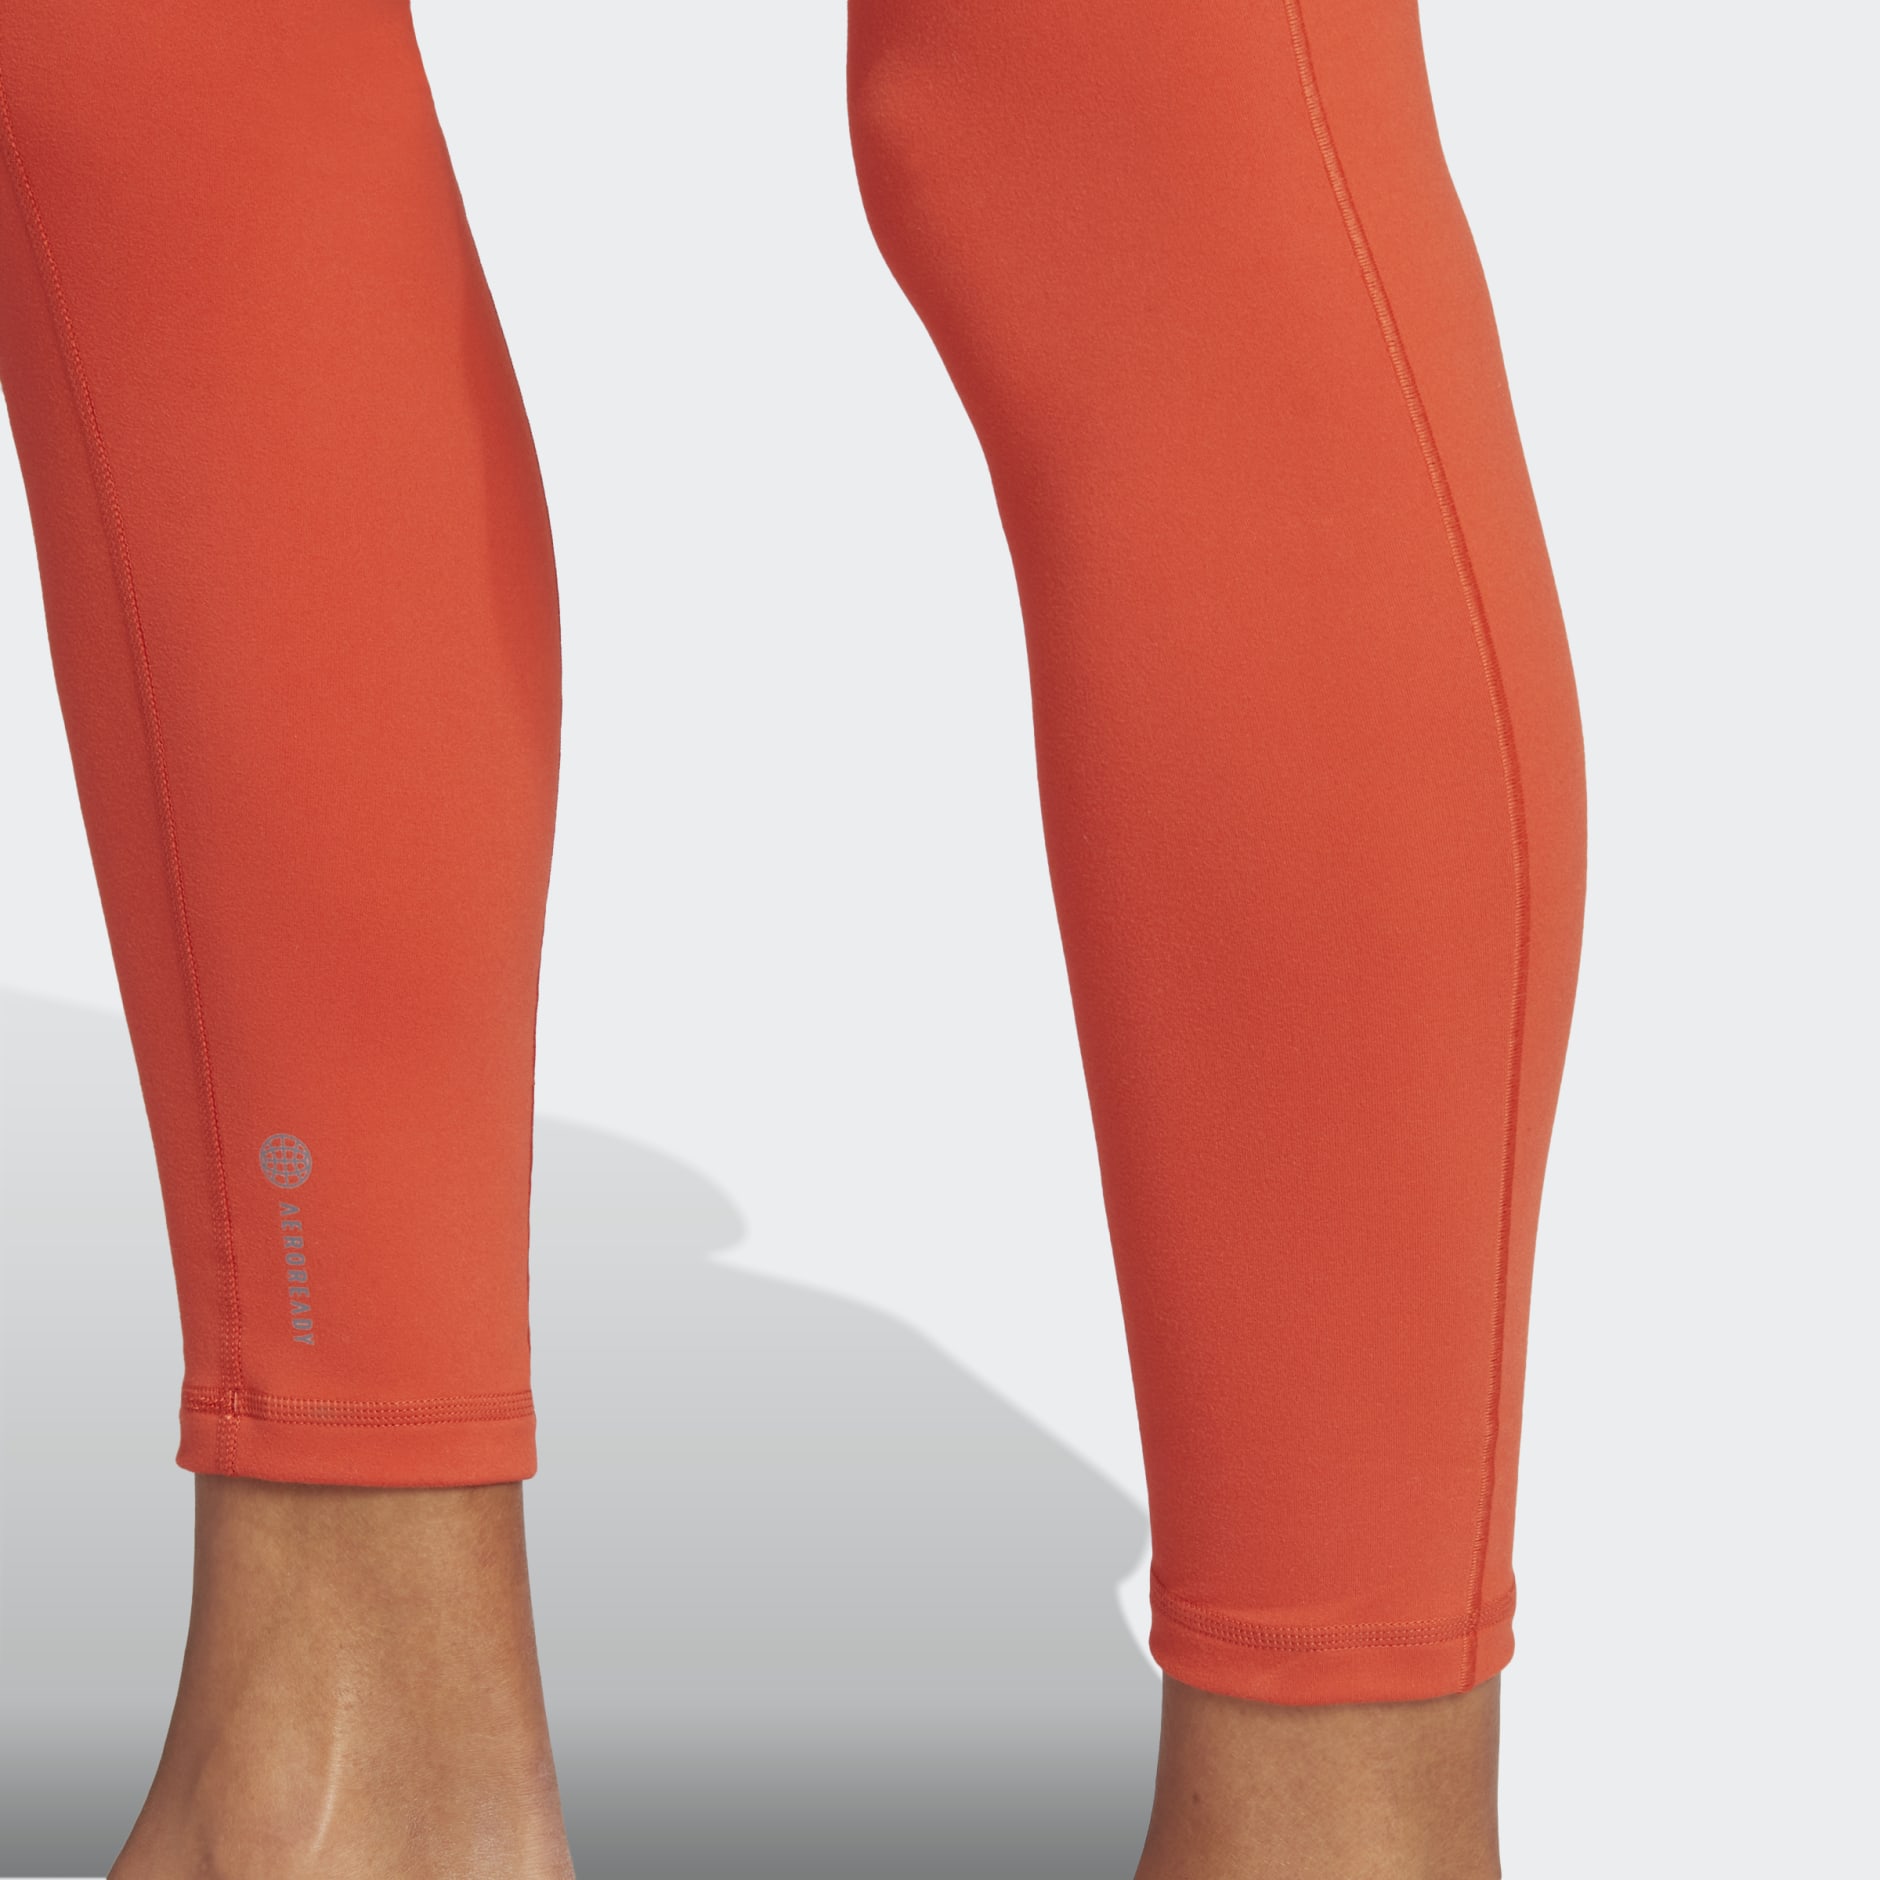 Women's Clothing - adidas Yoga Studio 7/8 Leggings (Plus Size) - Red